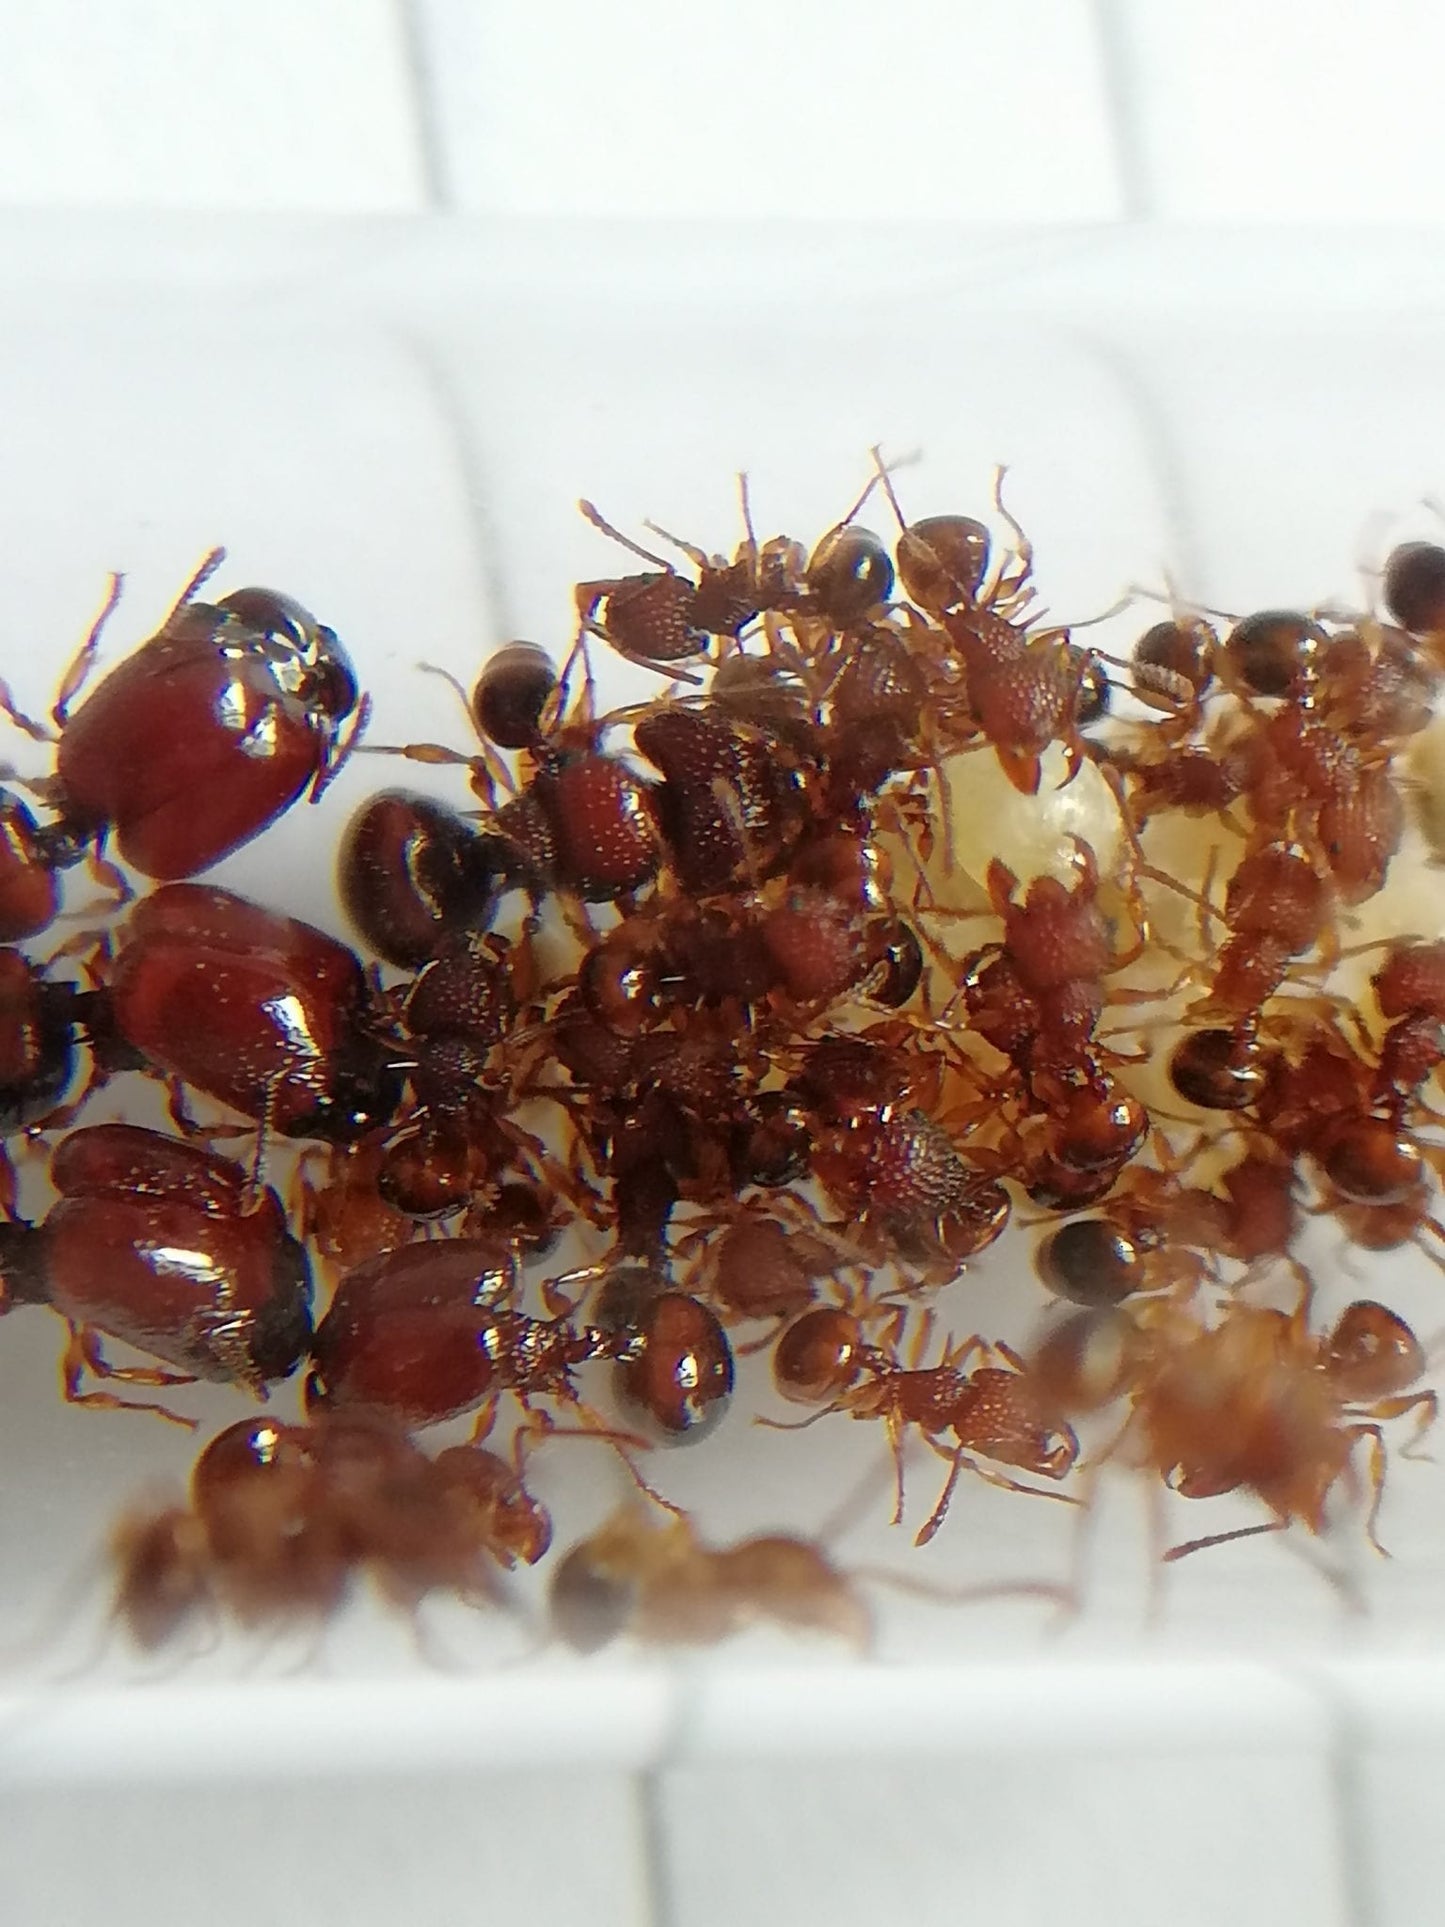 Ant colony Acanthomyrmex glabfemoralis